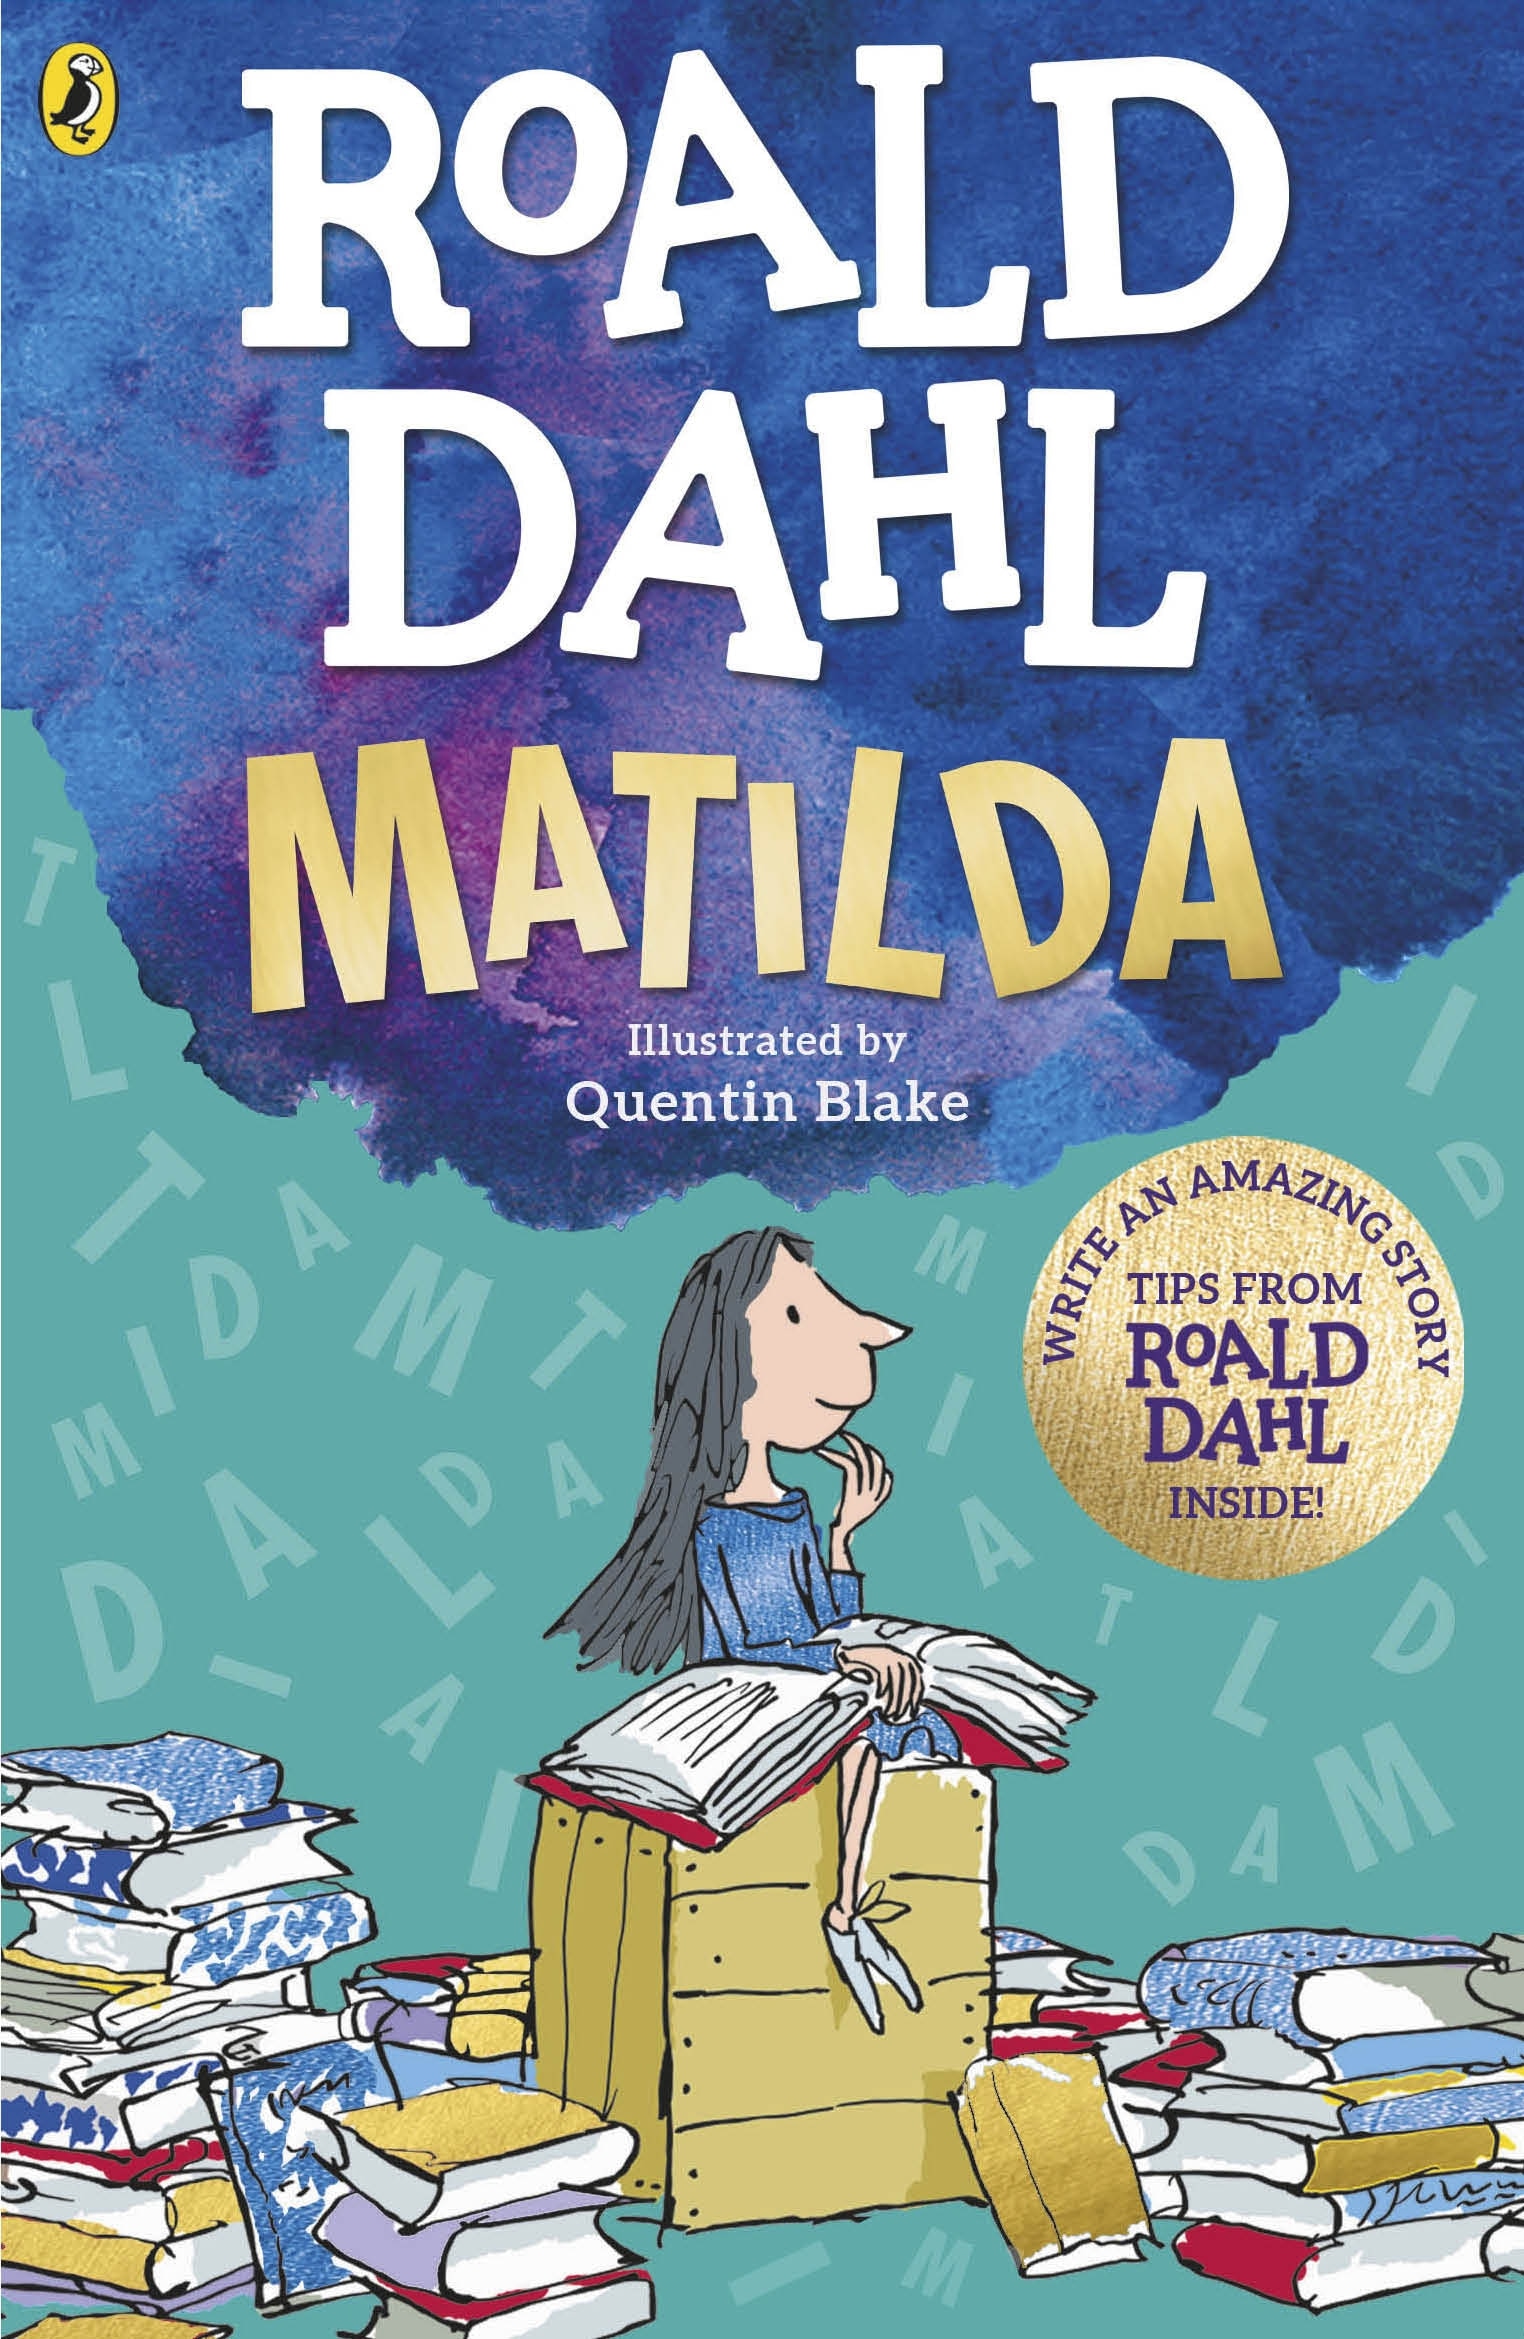 Book “Matilda” by Roald Dahl — February 17, 2022